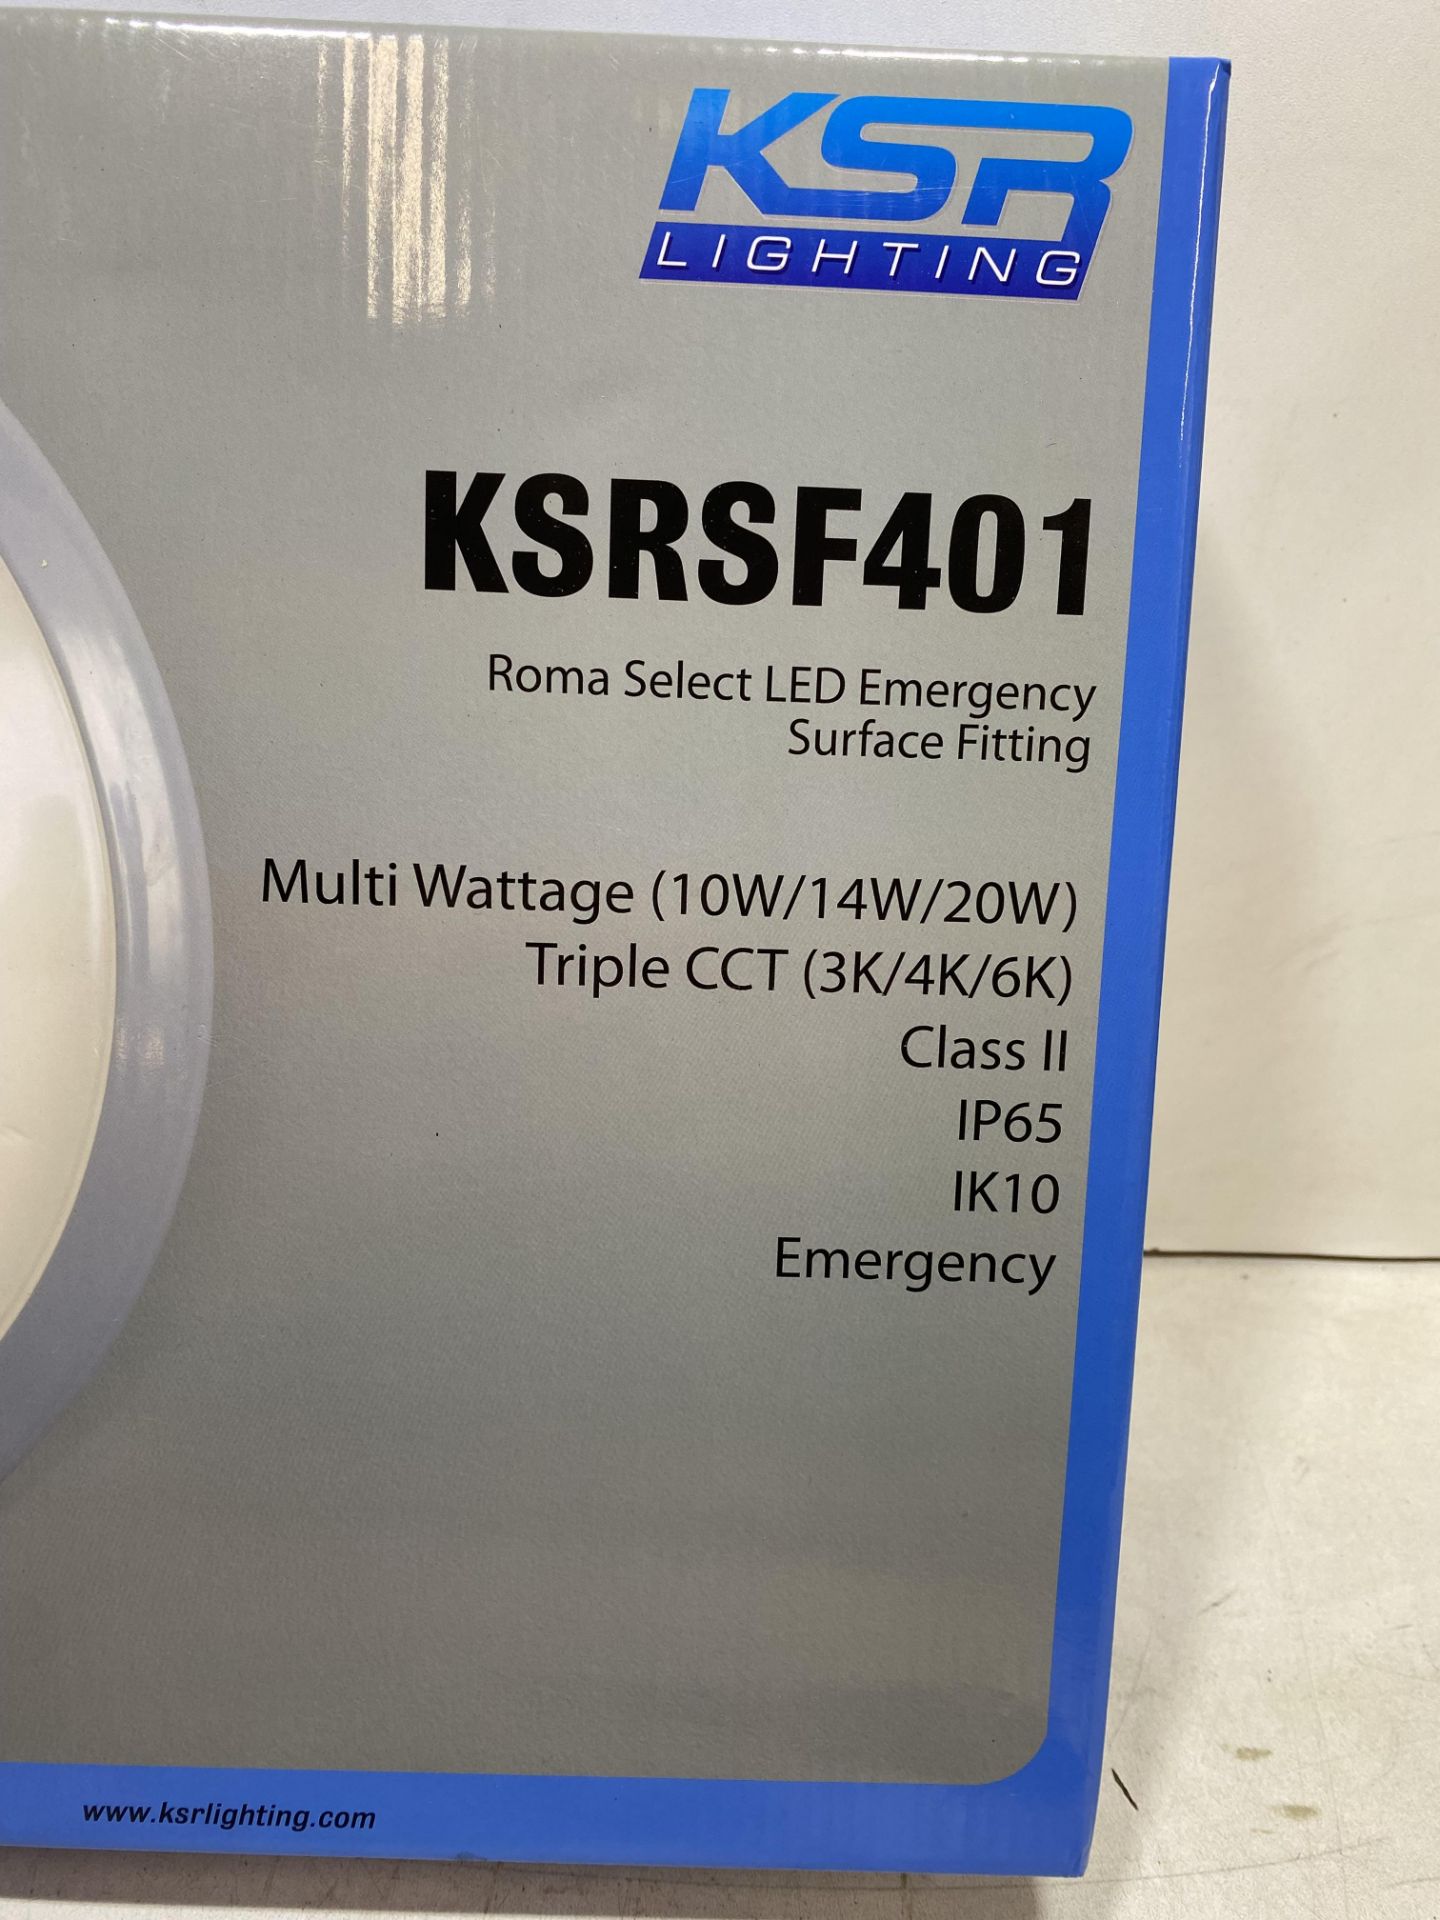 6 x KSR Lighting KSRSF401 Roma Select LED Emergency Surface Fitting Lights, White - Bild 4 aus 4